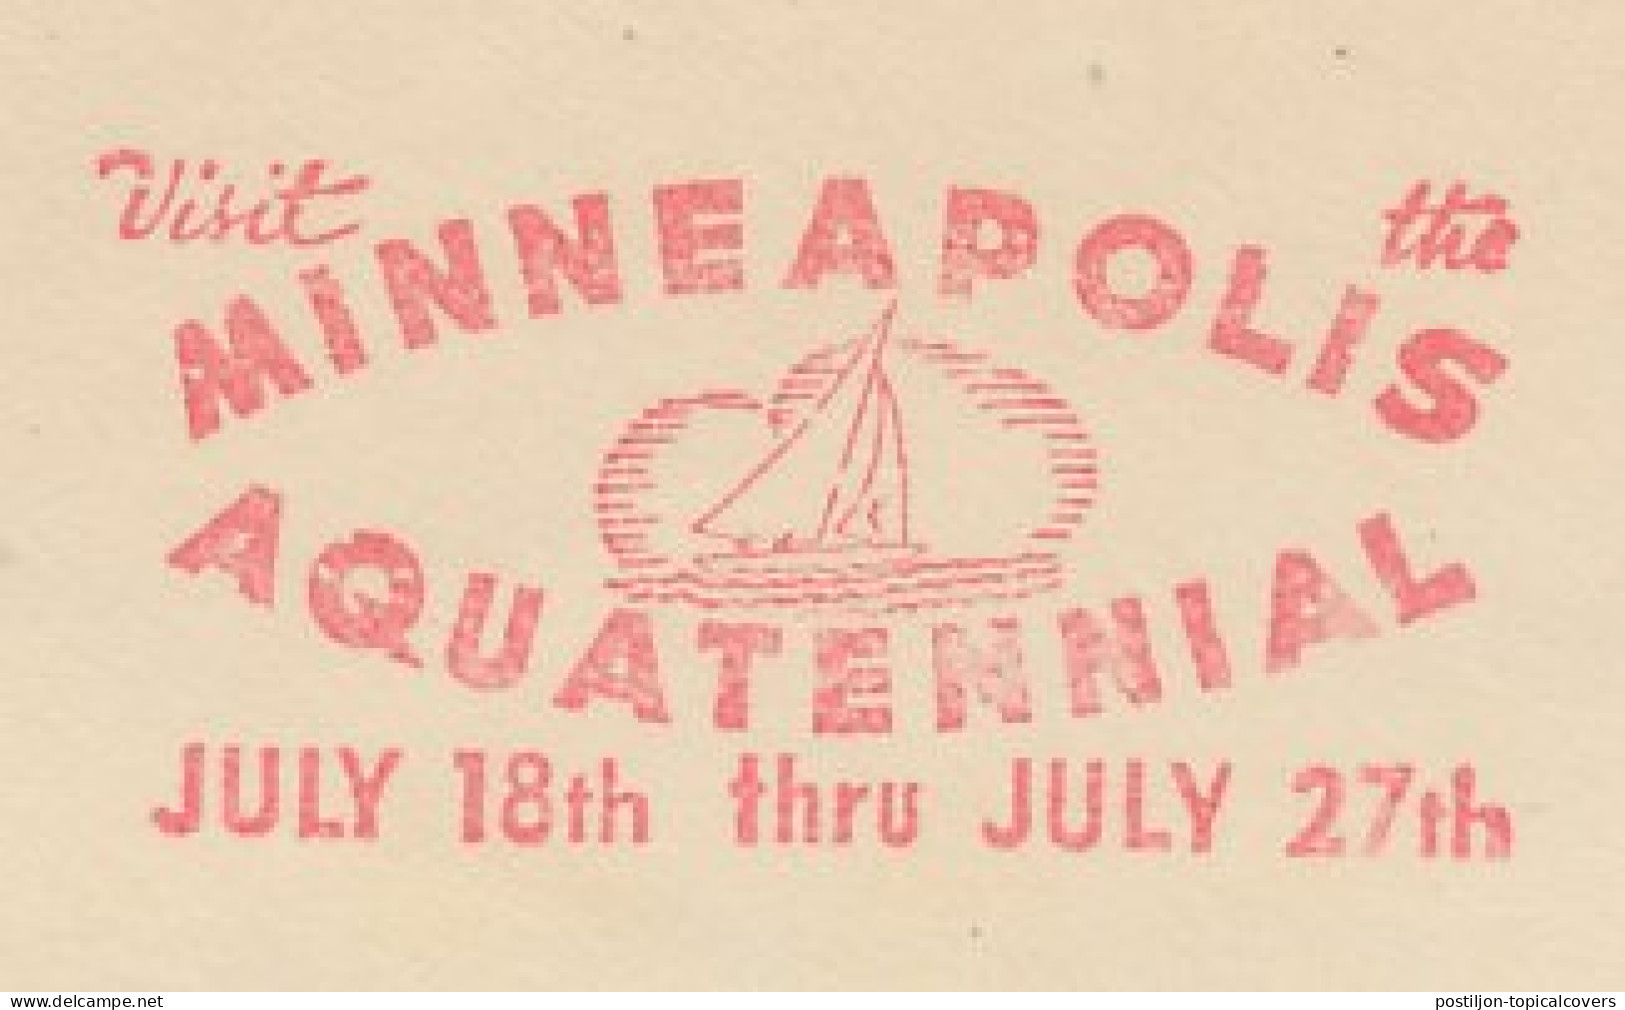 Meter Cut USA 1947 Minneapolis Aquatennial 1947 - Other & Unclassified